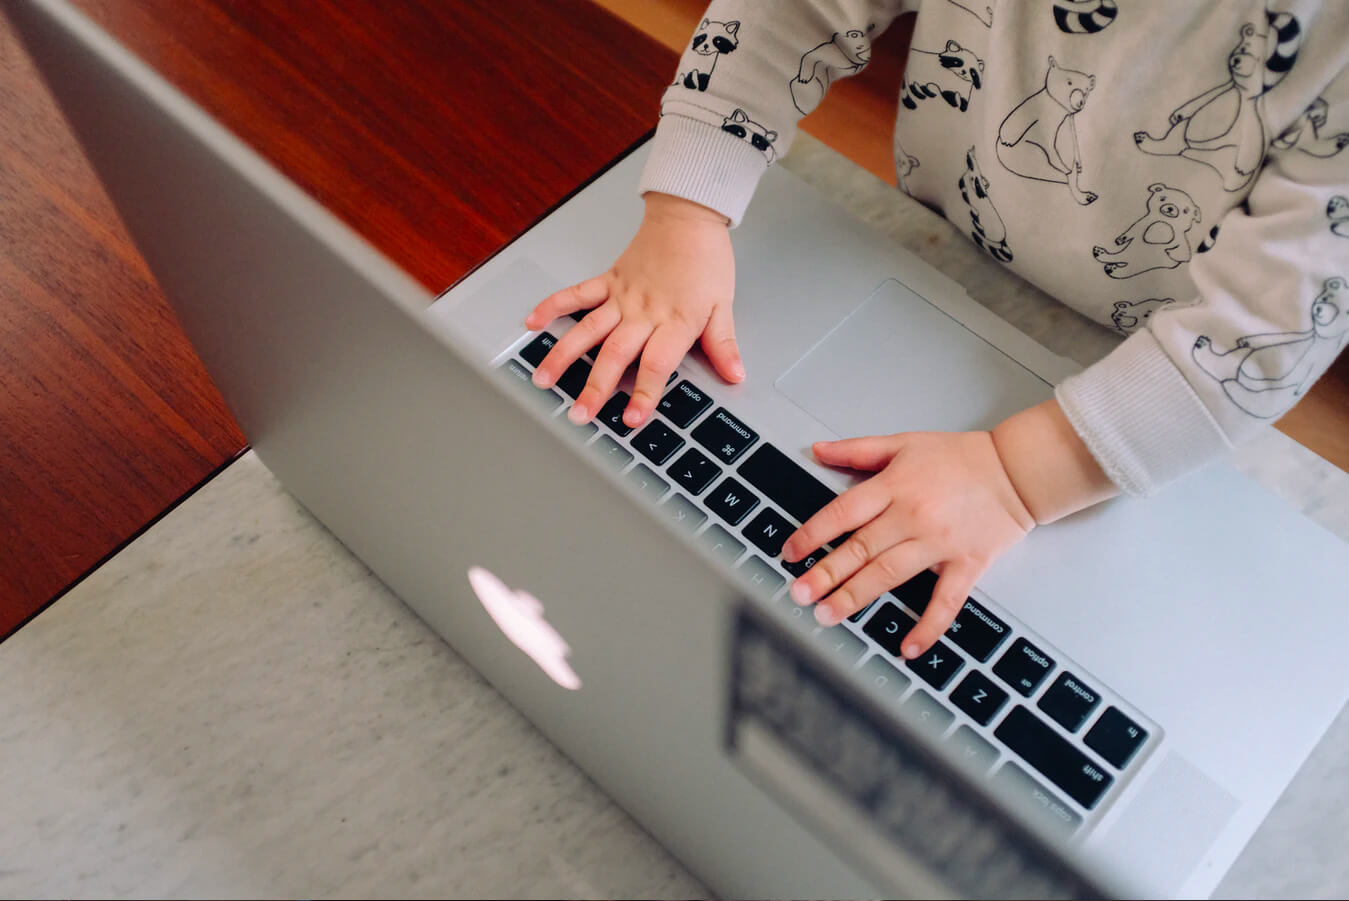 A child using an Apple laptop